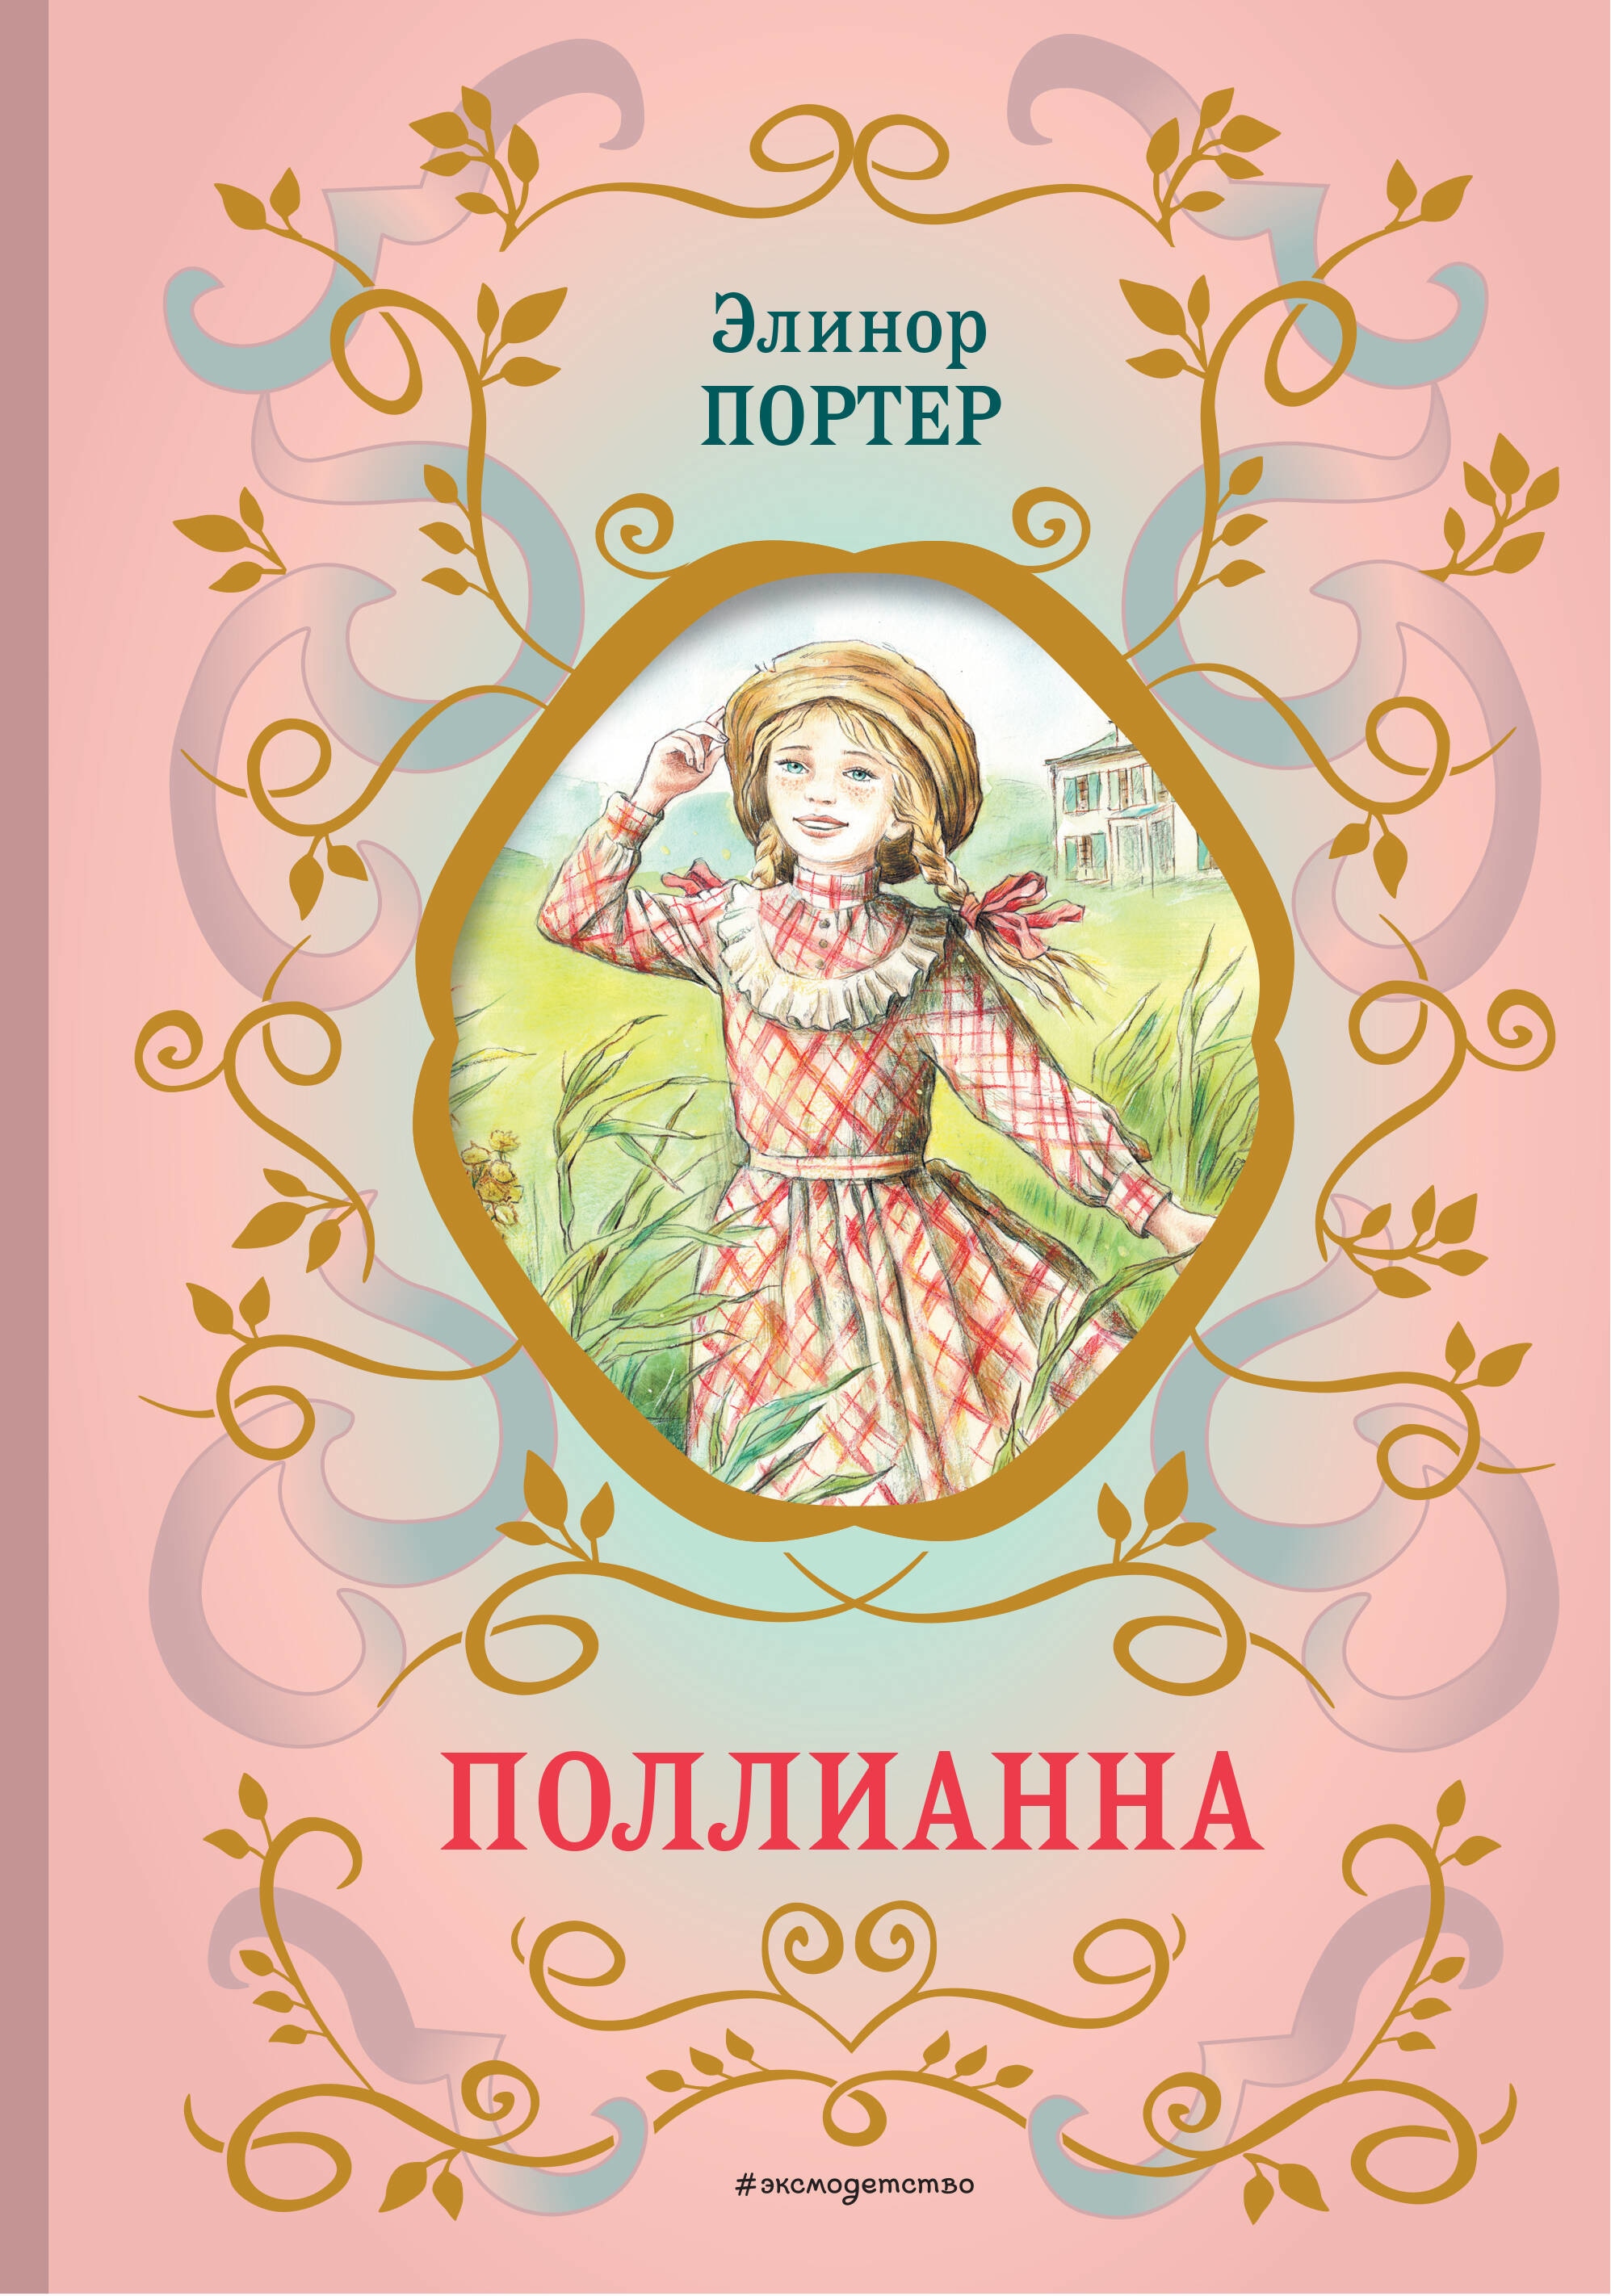 Book “Поллианна (ил. Е. Запесочной)” by Элинор Портер — July 20, 2023